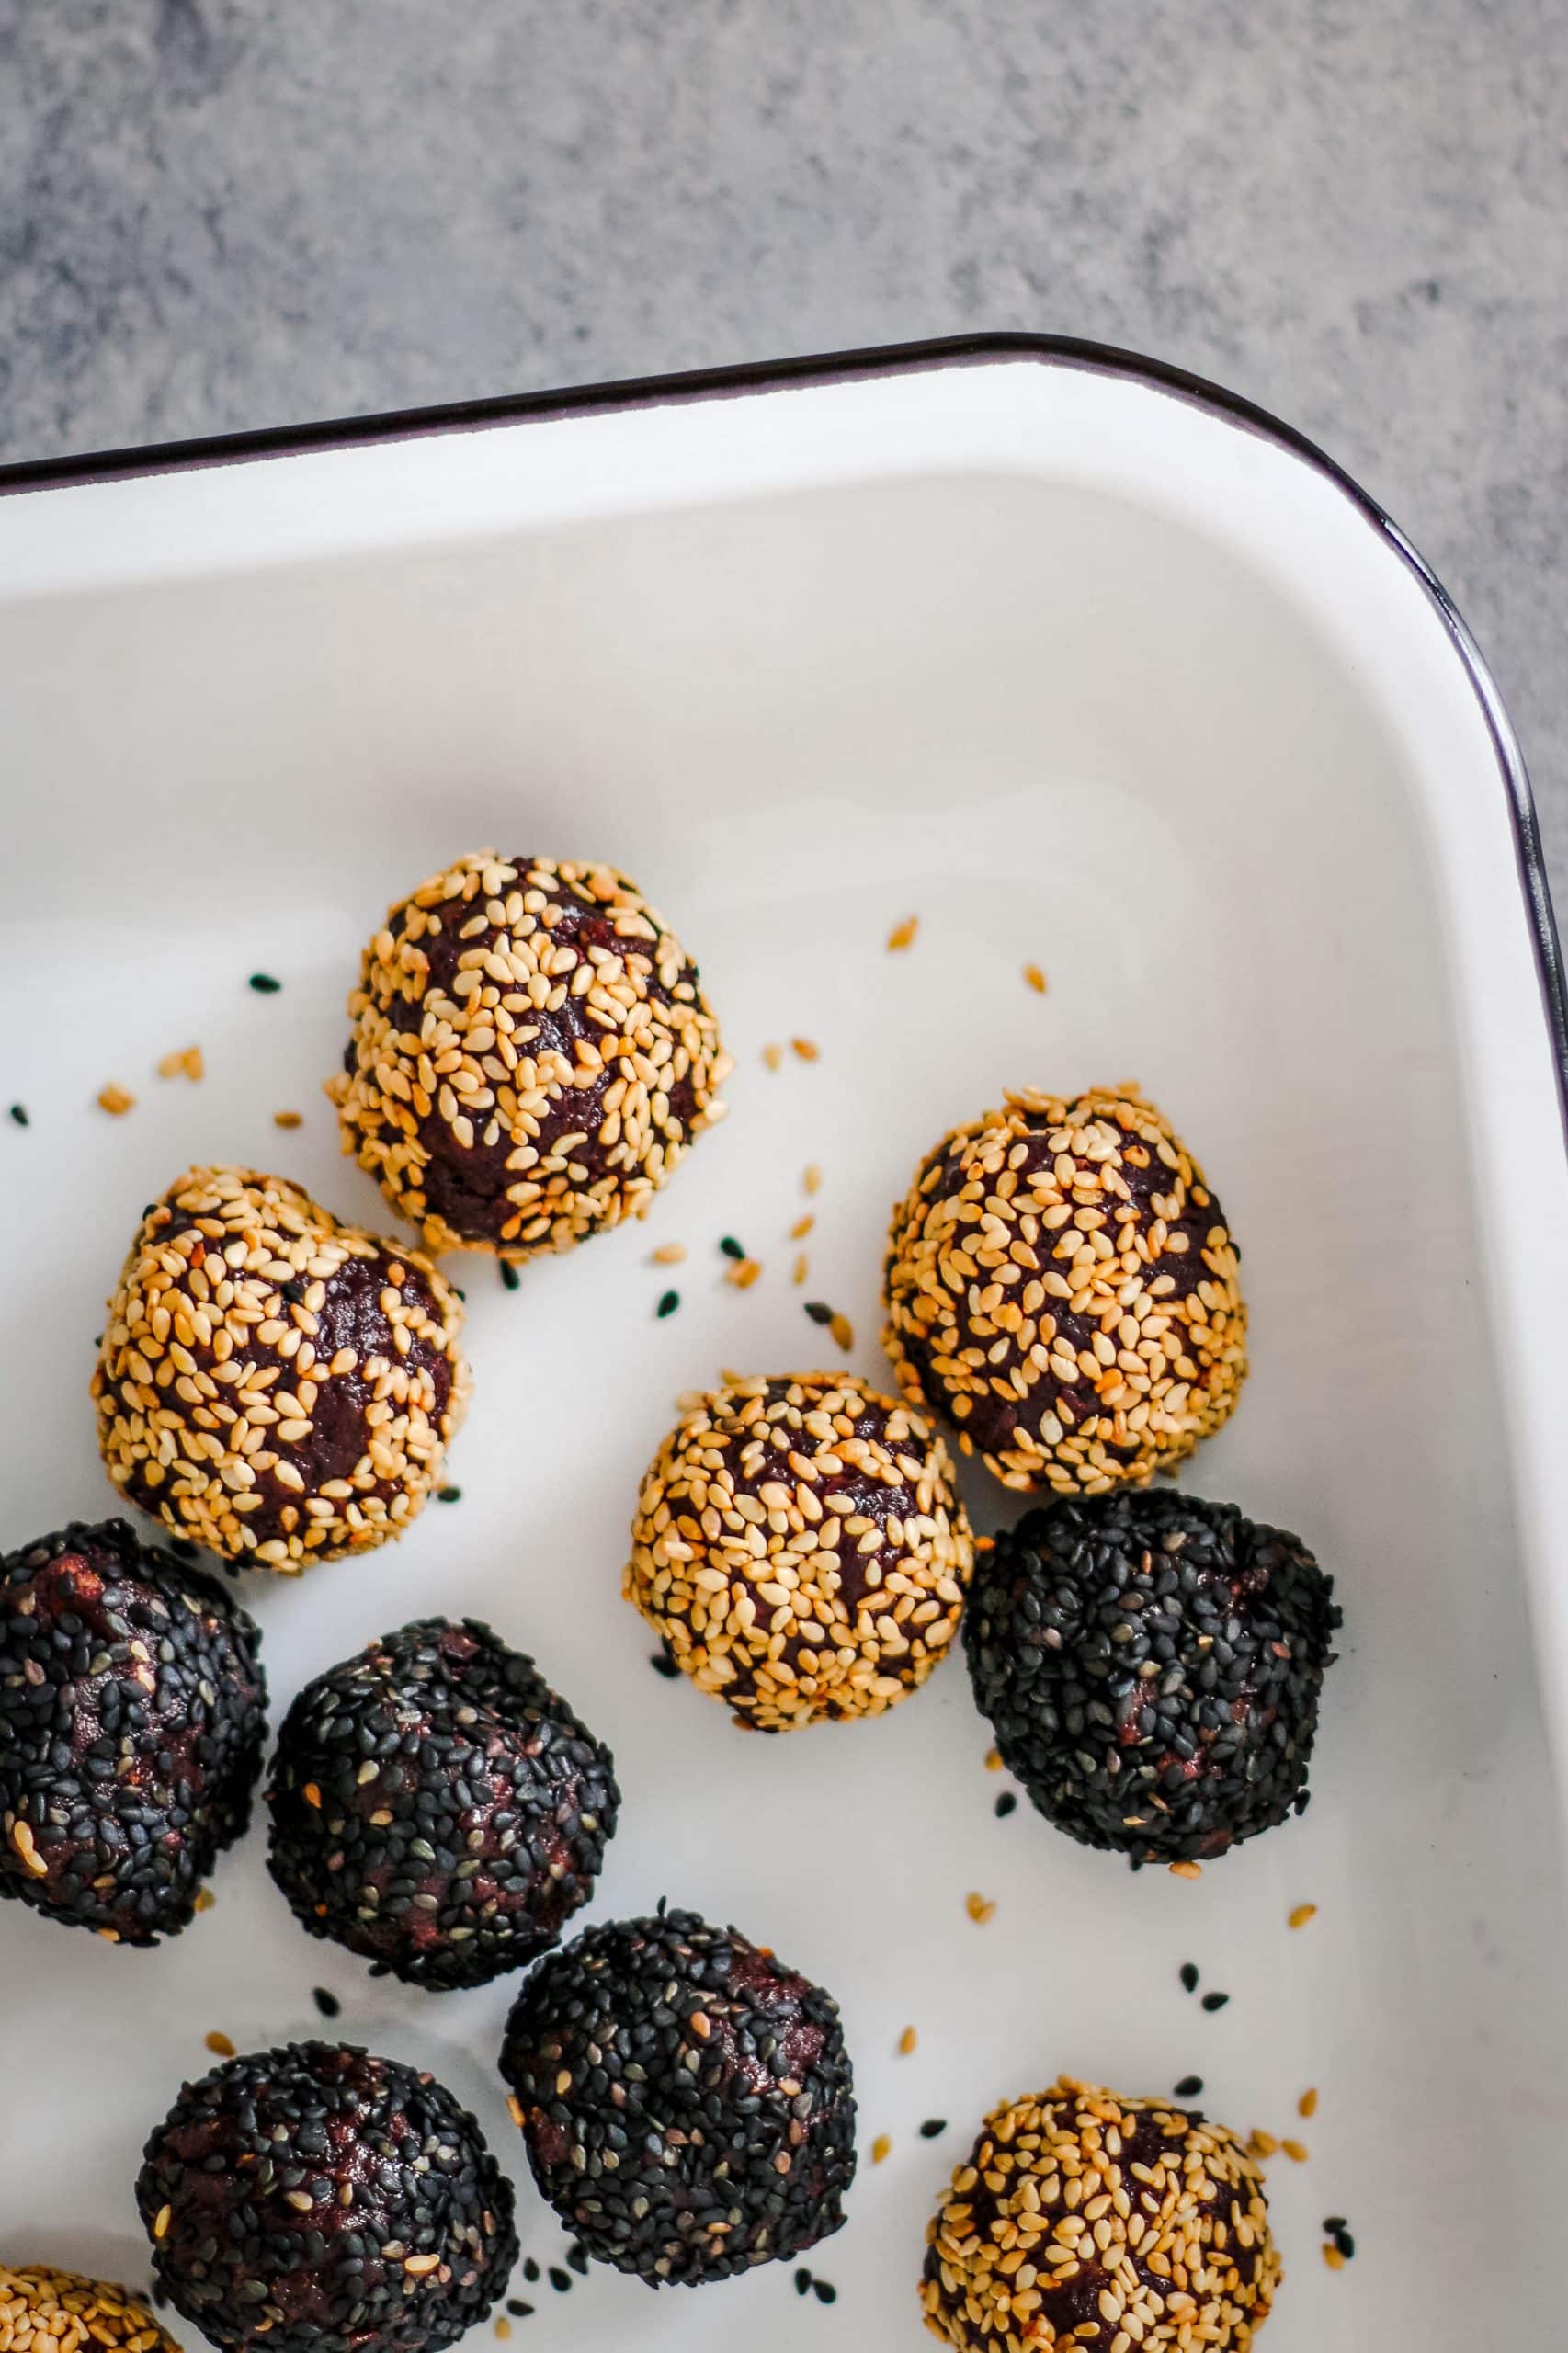 Sesame coated date balls on an enamel tray.